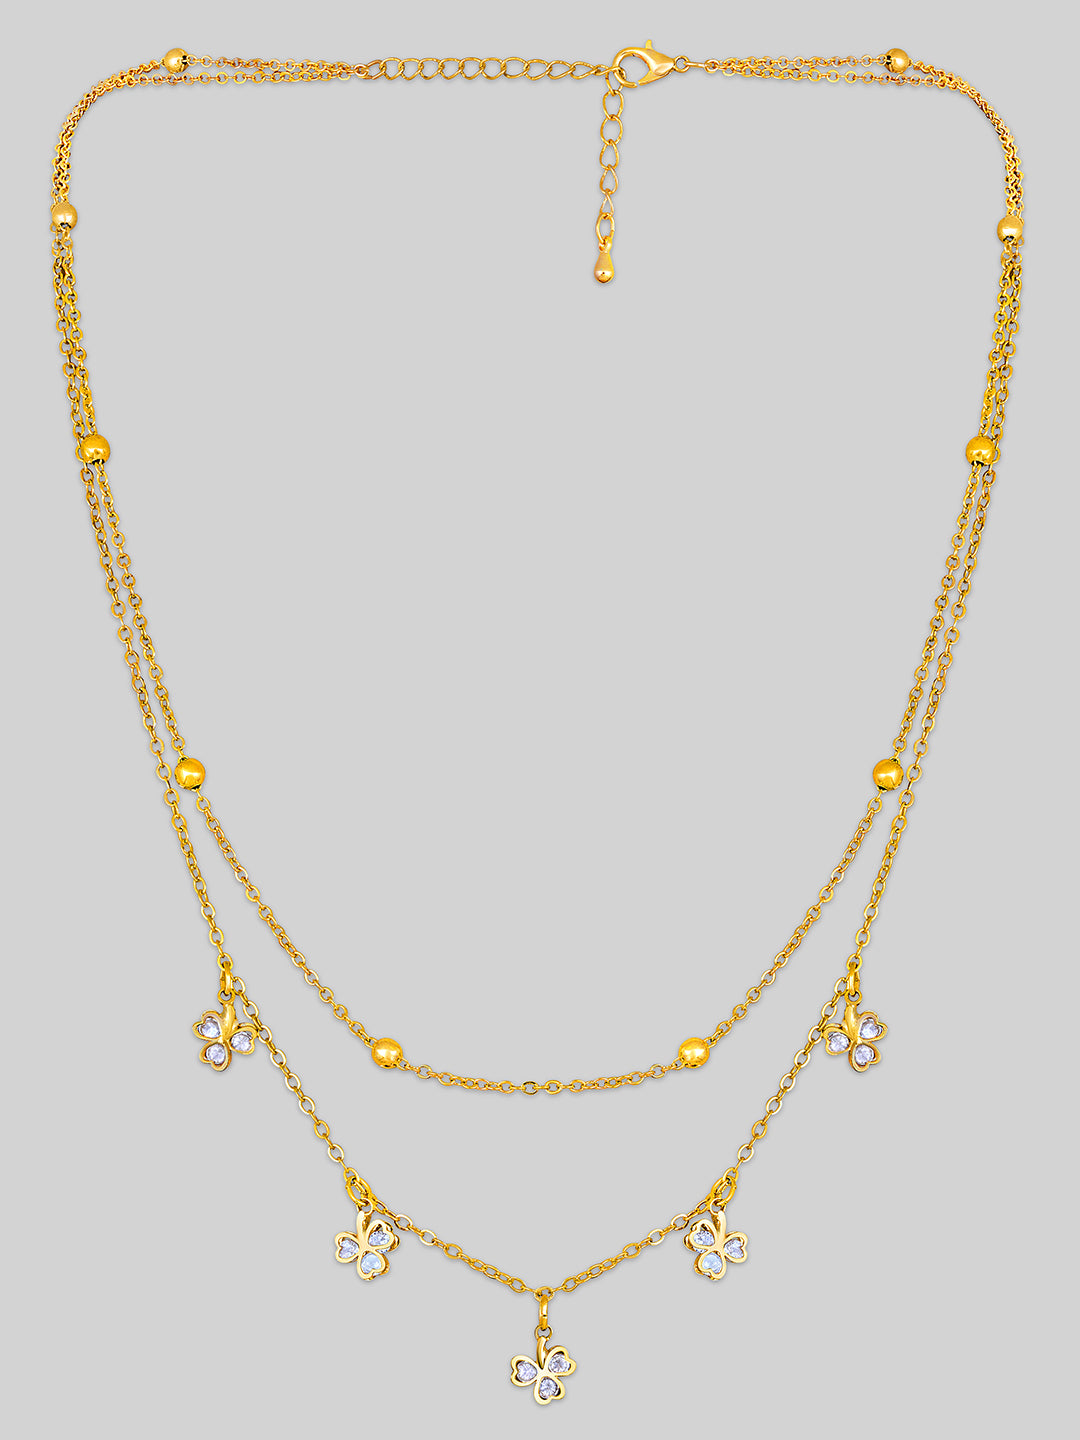 Lavish Necklace Chain For Women